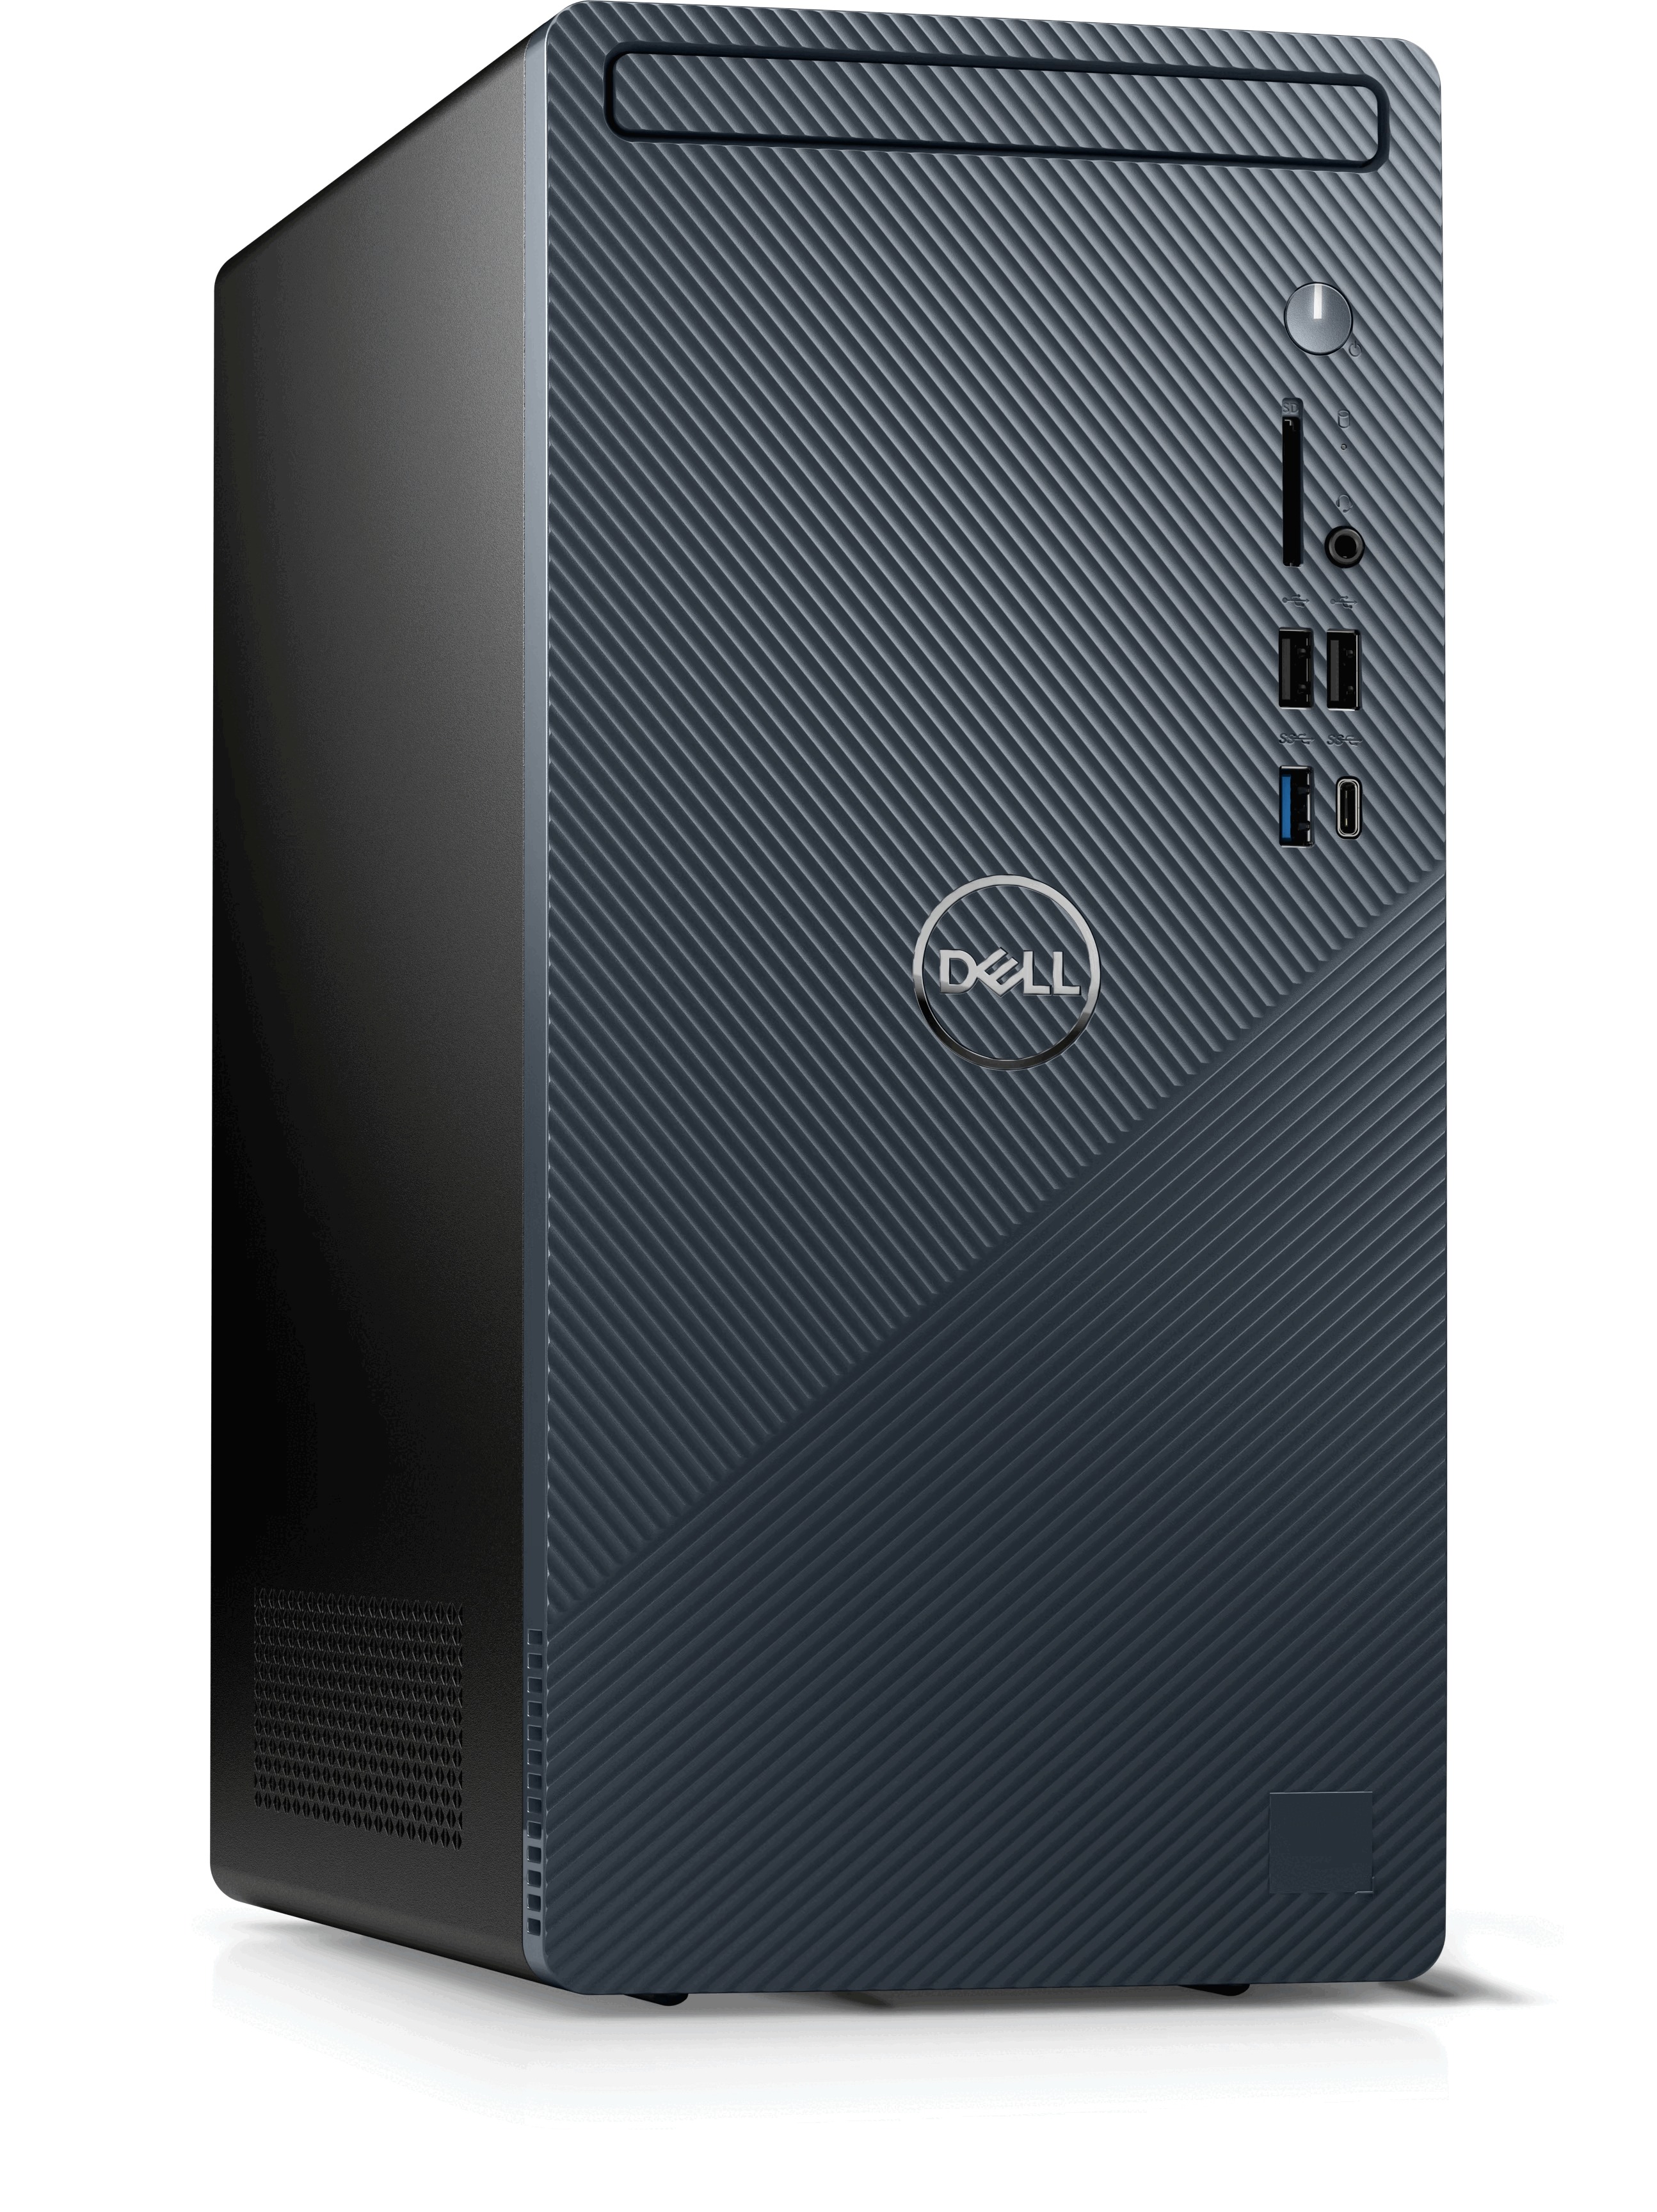 Dell Inspiron 3910 Intel Core i7-13700 Desktop $699.99